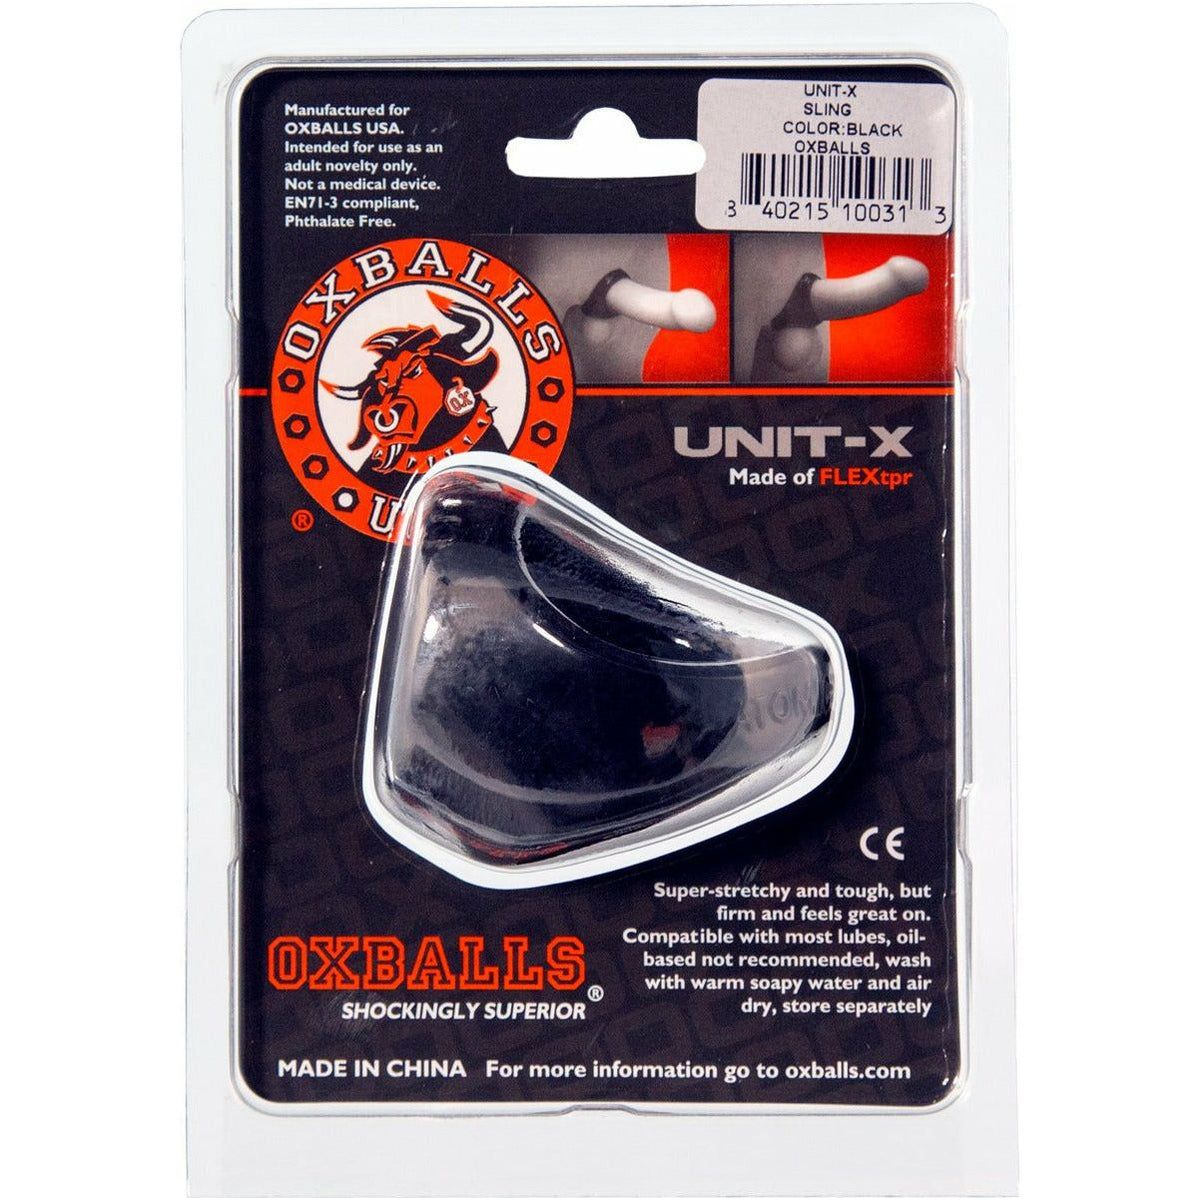 Oxballs Unit X Cocksling - Black